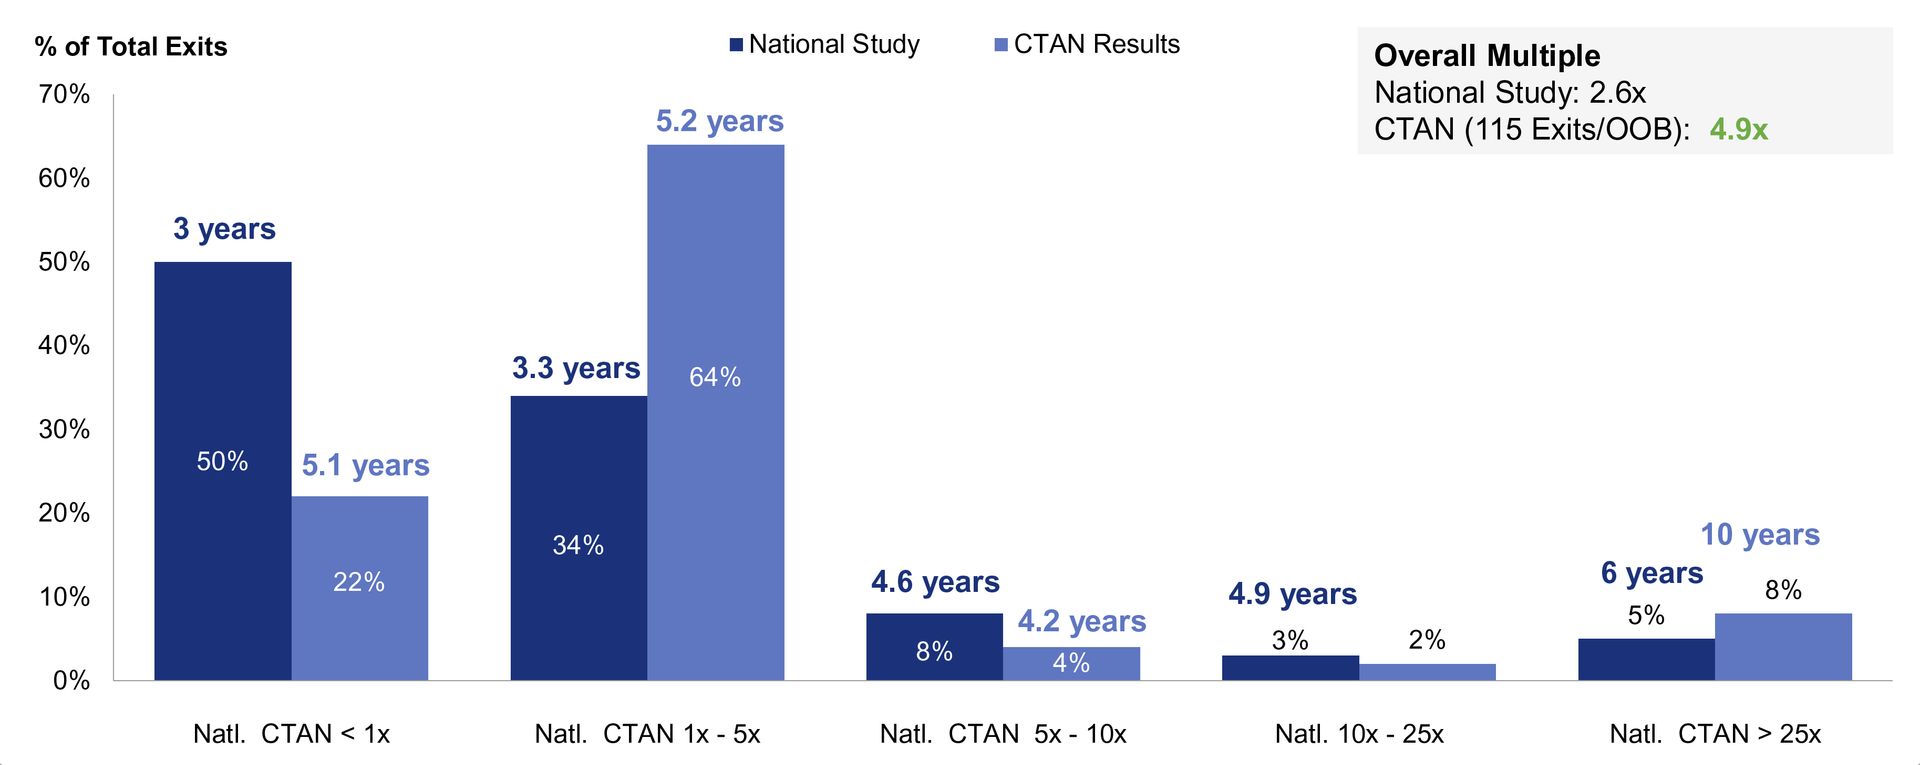 Distribution of Returns by National Angel Investors vs. CTAN Investors